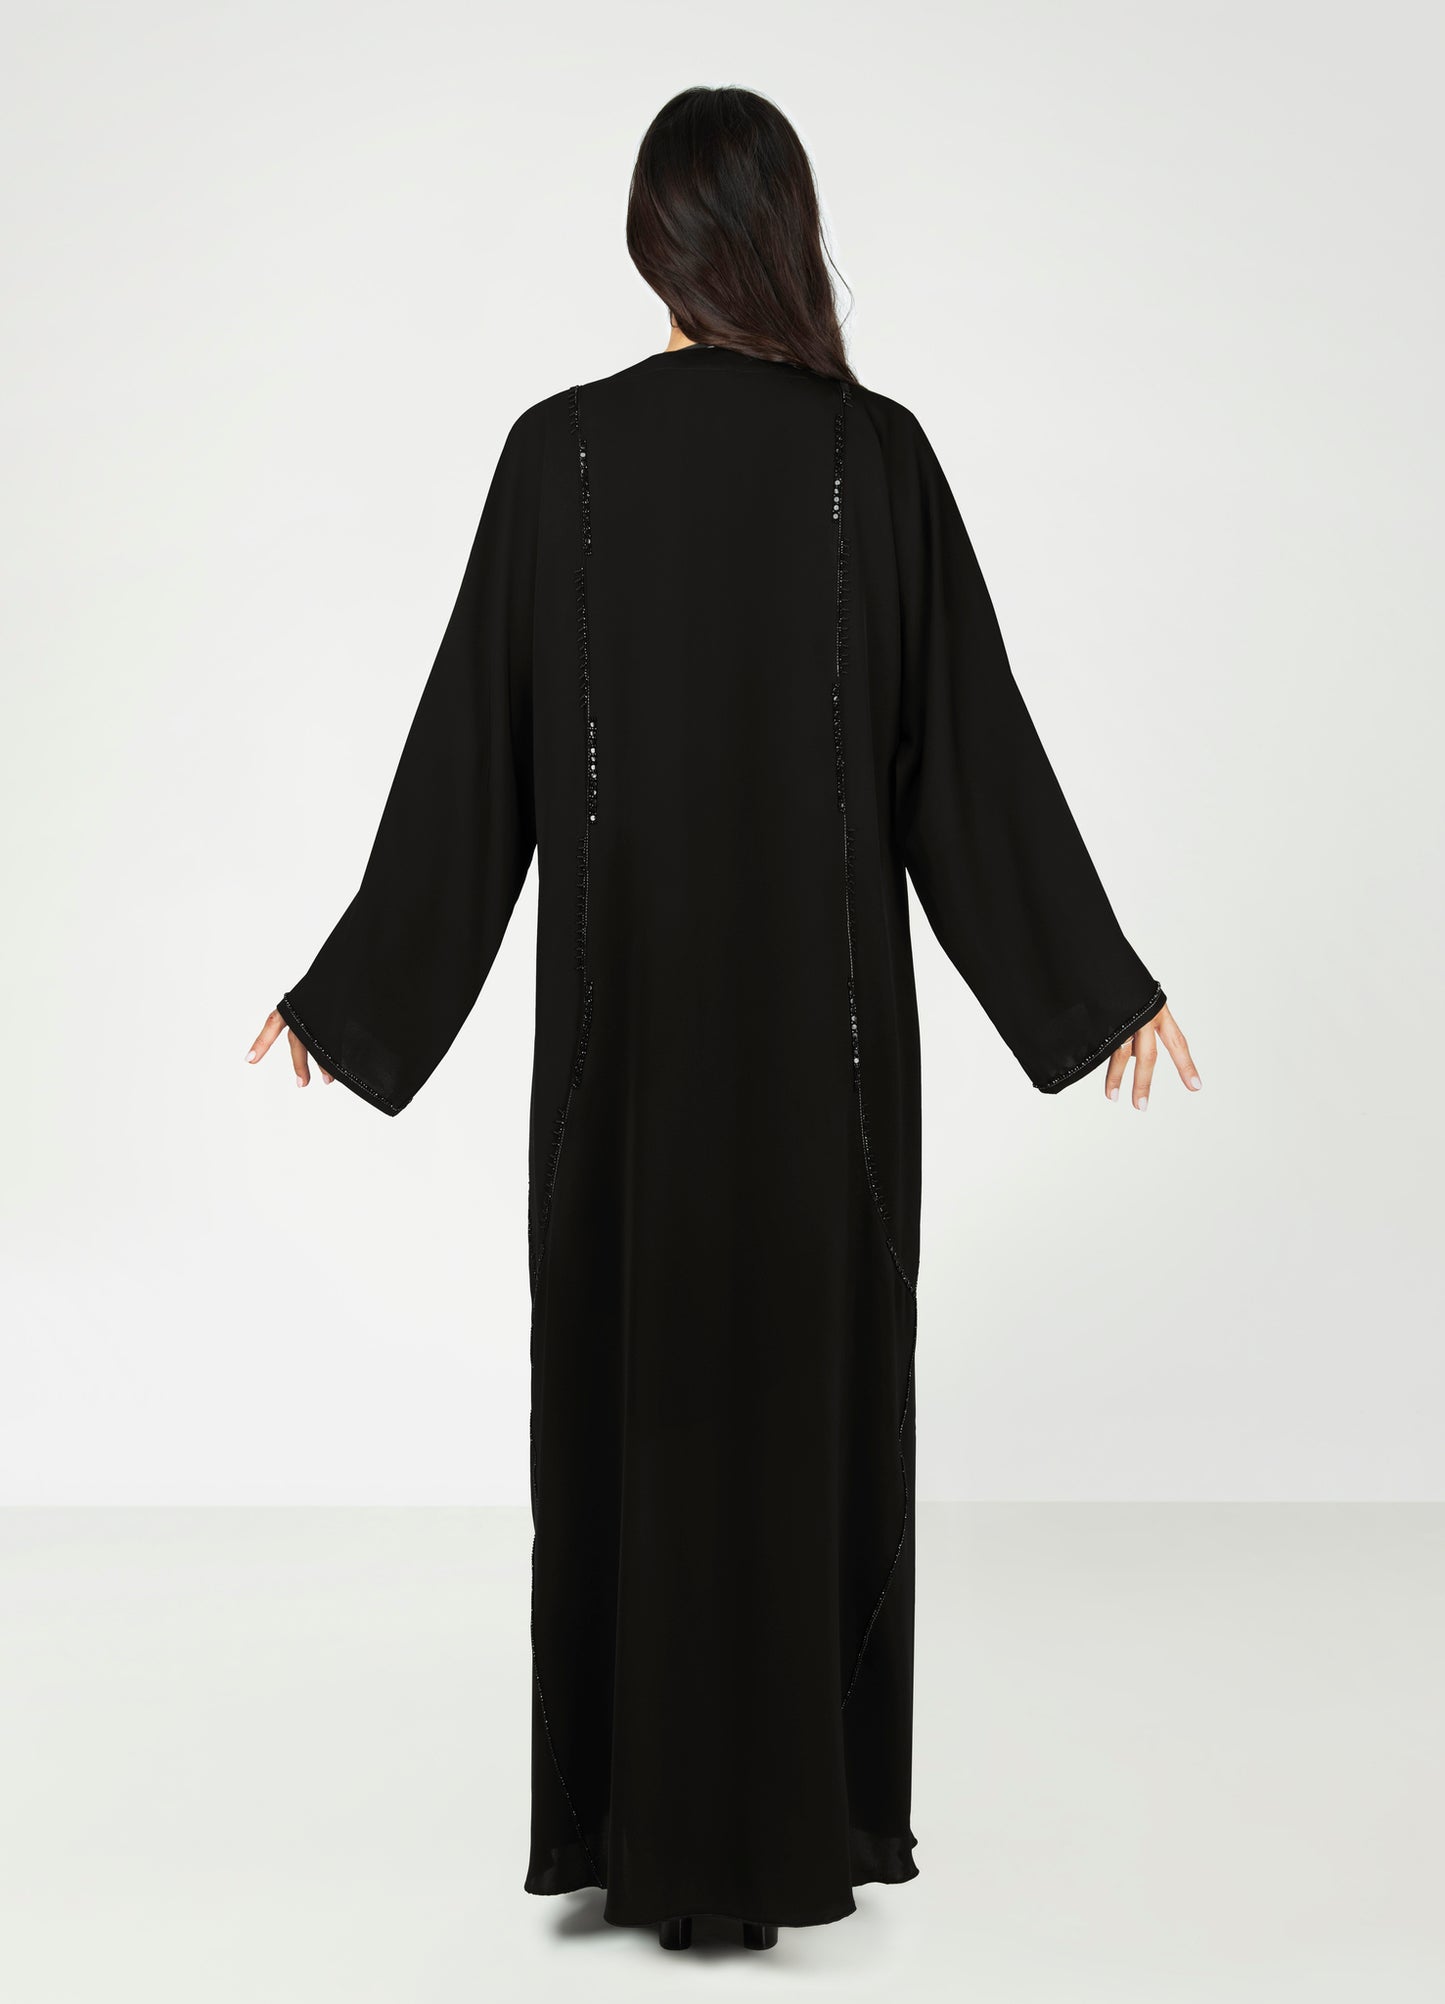 Beaded Detail Black Abaya